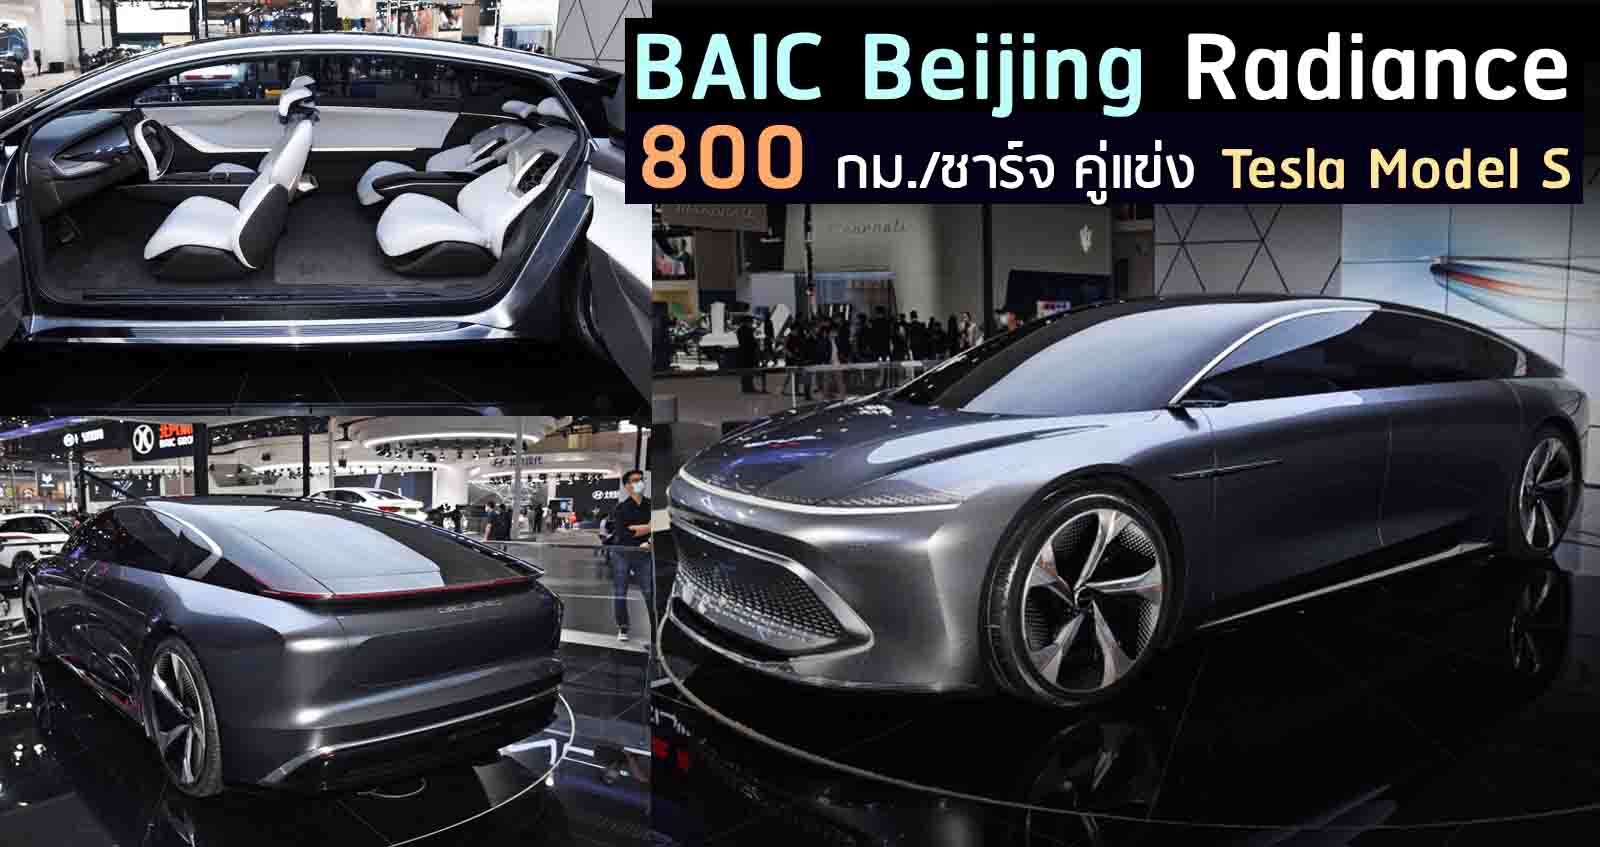 BAIC Beijing Radiance 800 กม./ชาร์จ คู่แข่ง Tesla Model S